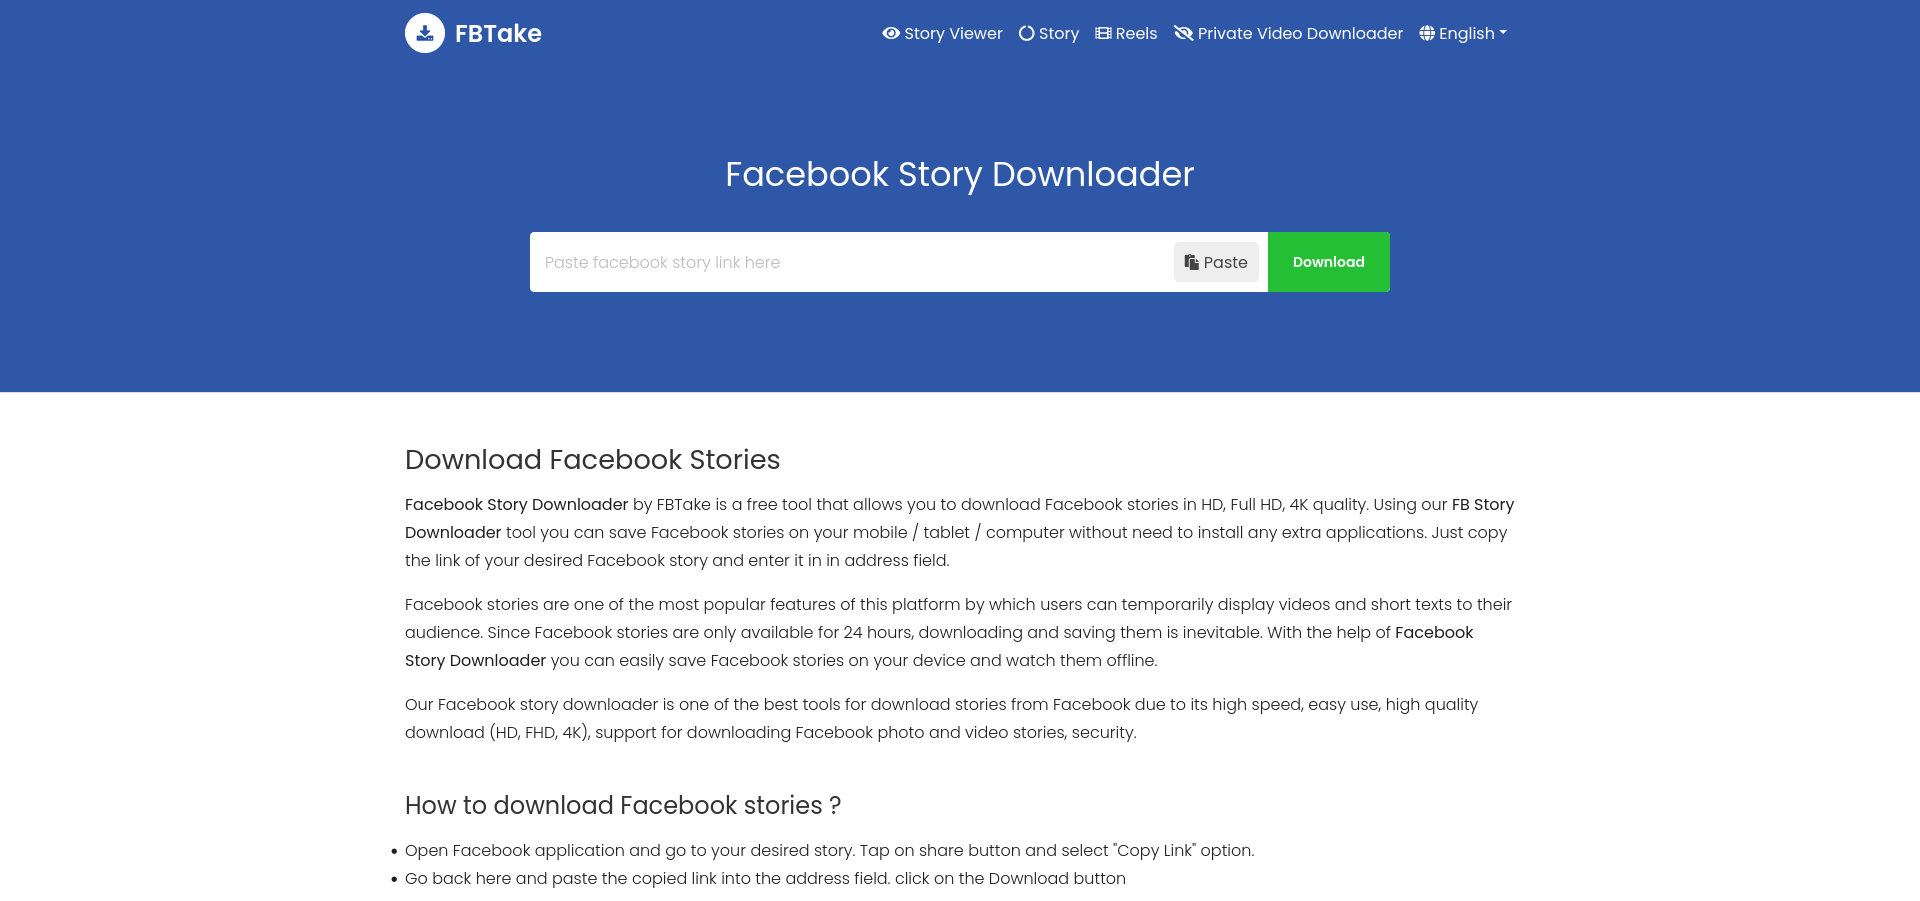 FBTake Facebook Story Downloader - FBTake